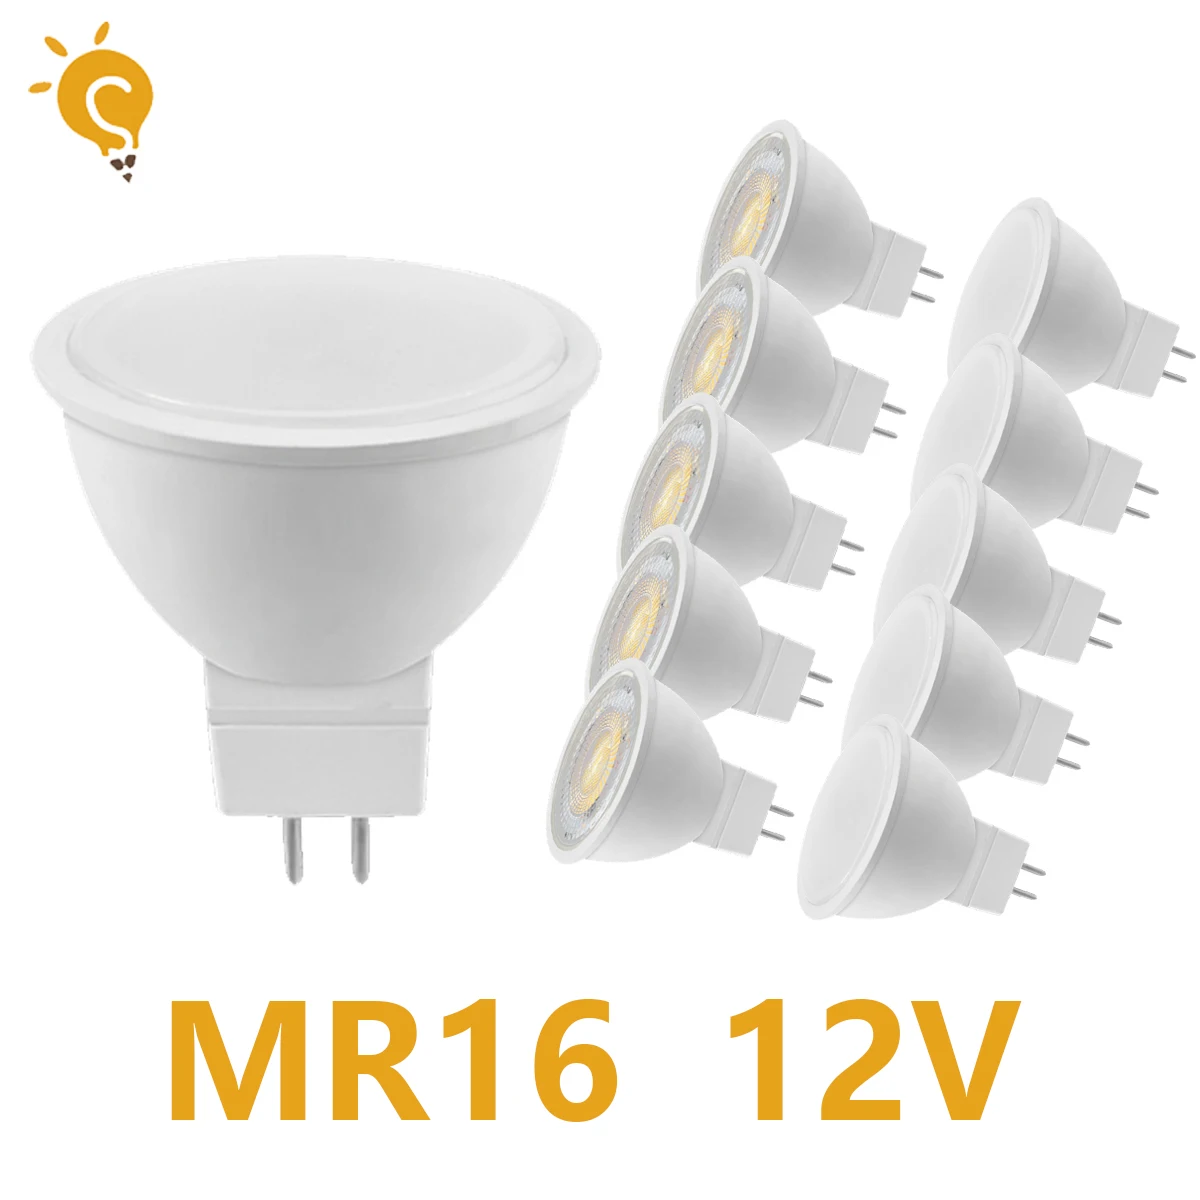 

4-20PCS MR16 AC/DC 12V LED Spotlight Bulb GU5.3 Low Pressure 3W 5W 6W 7W Light 120 Degrees 38 Degrees Study Kitchen For Home